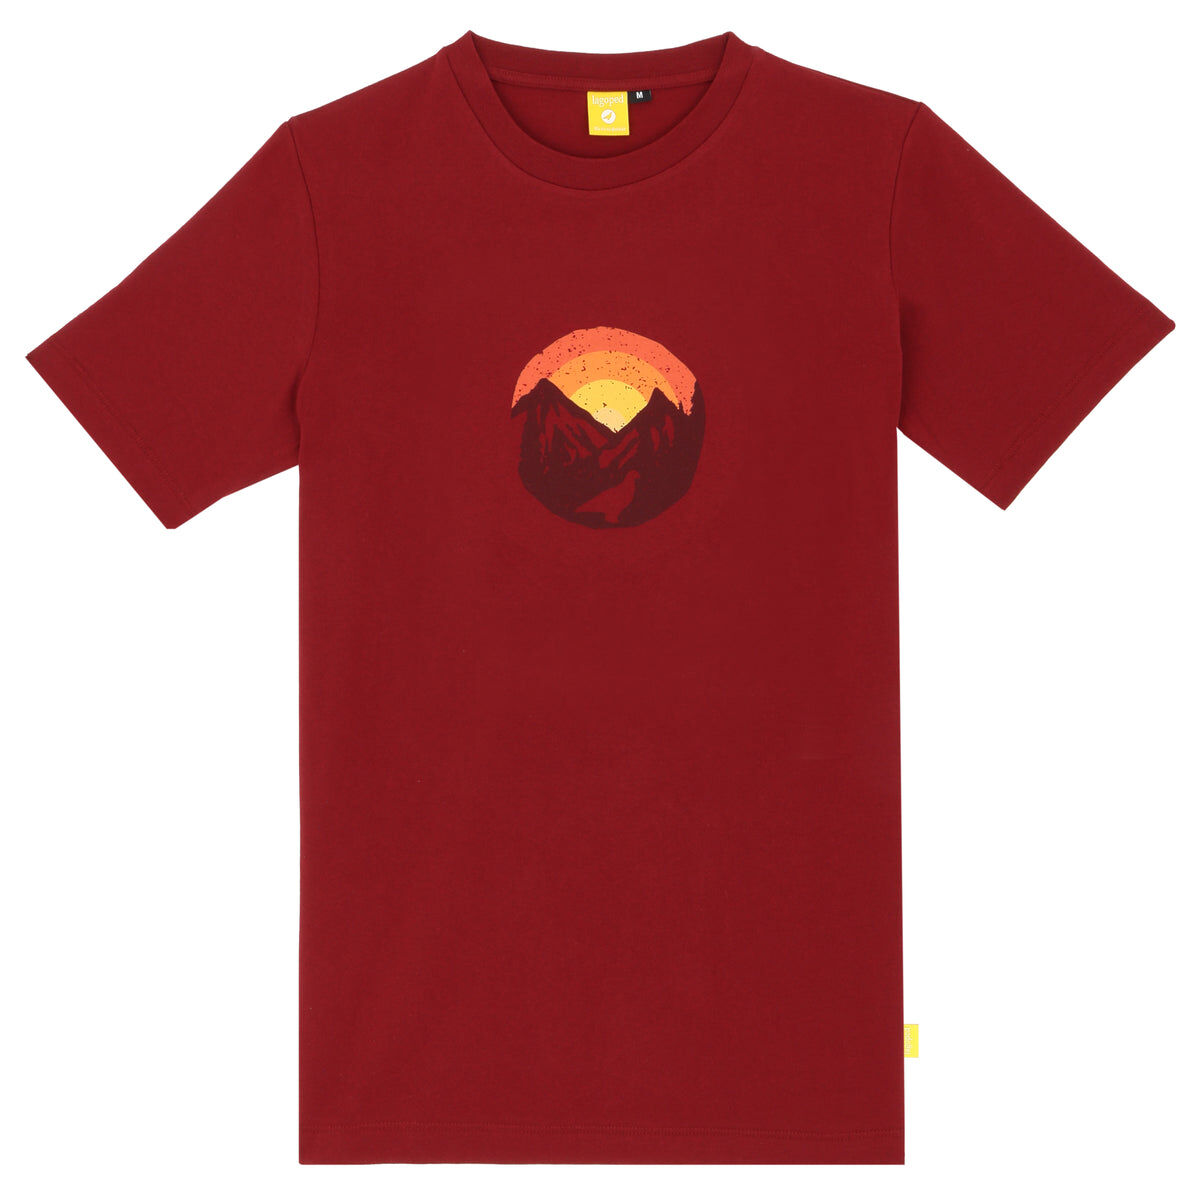 Lagoped Teerec Mountain1 - T-shirt - Men's